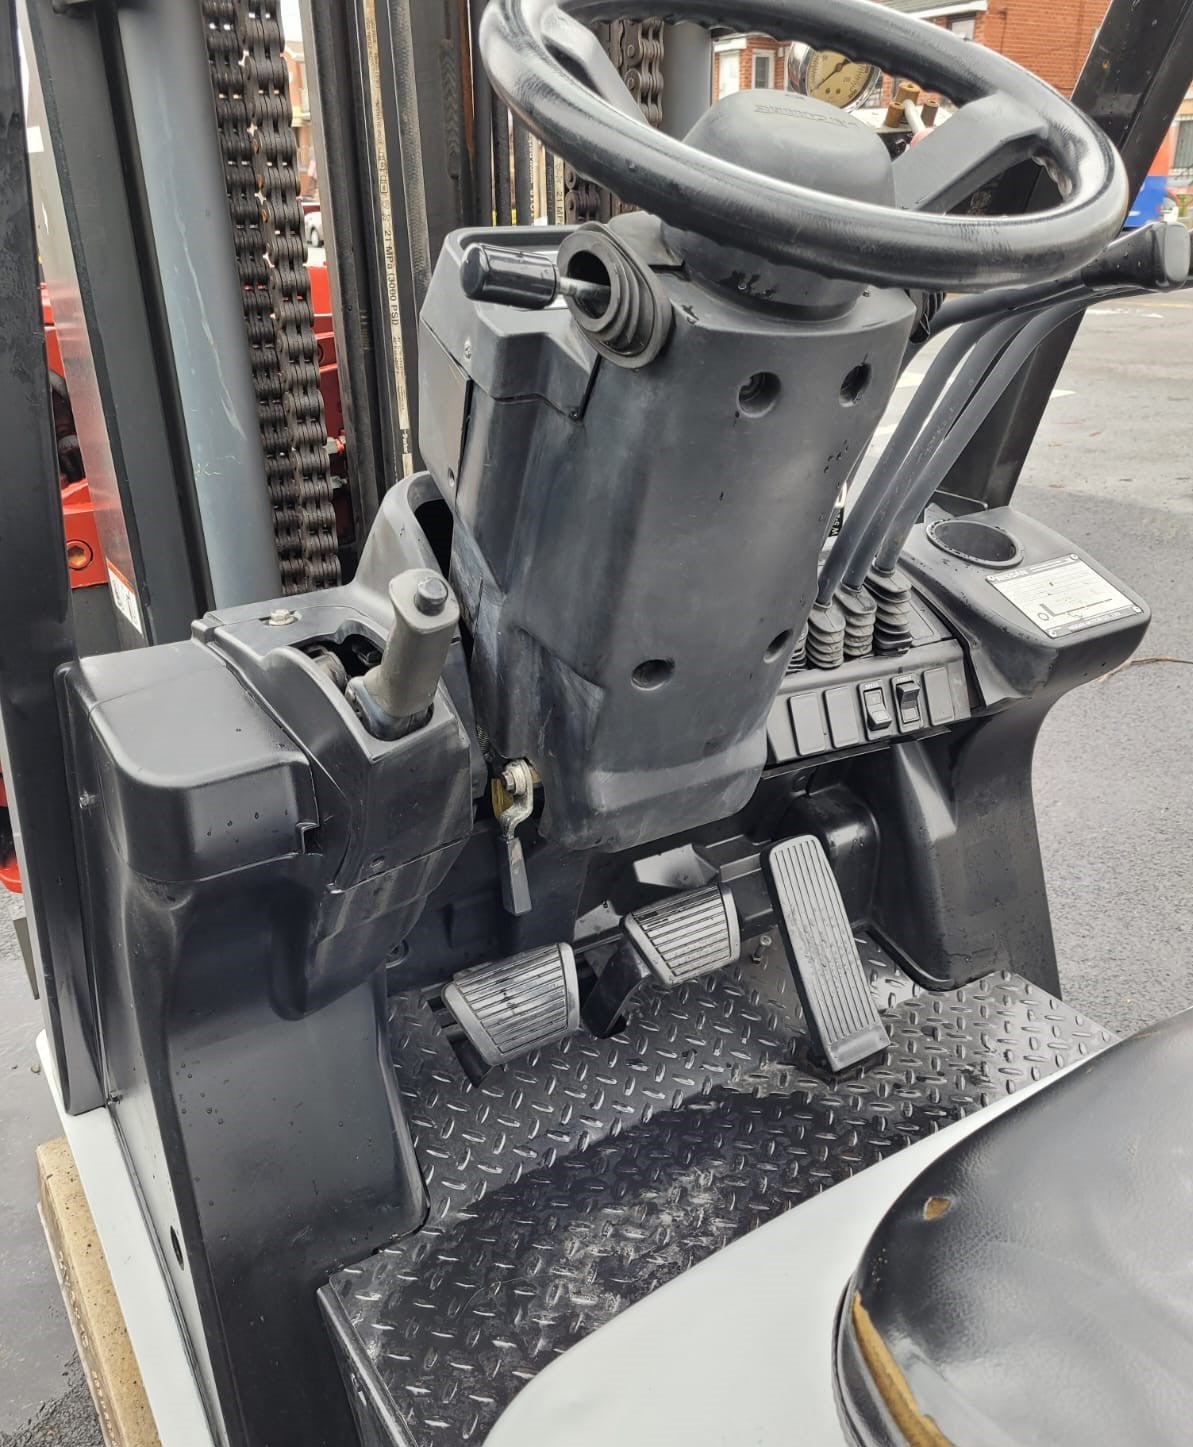 Nissan MCU1F2A30LV Forklift w/Tygard Claw TC500 Rotating Clamp Attachment